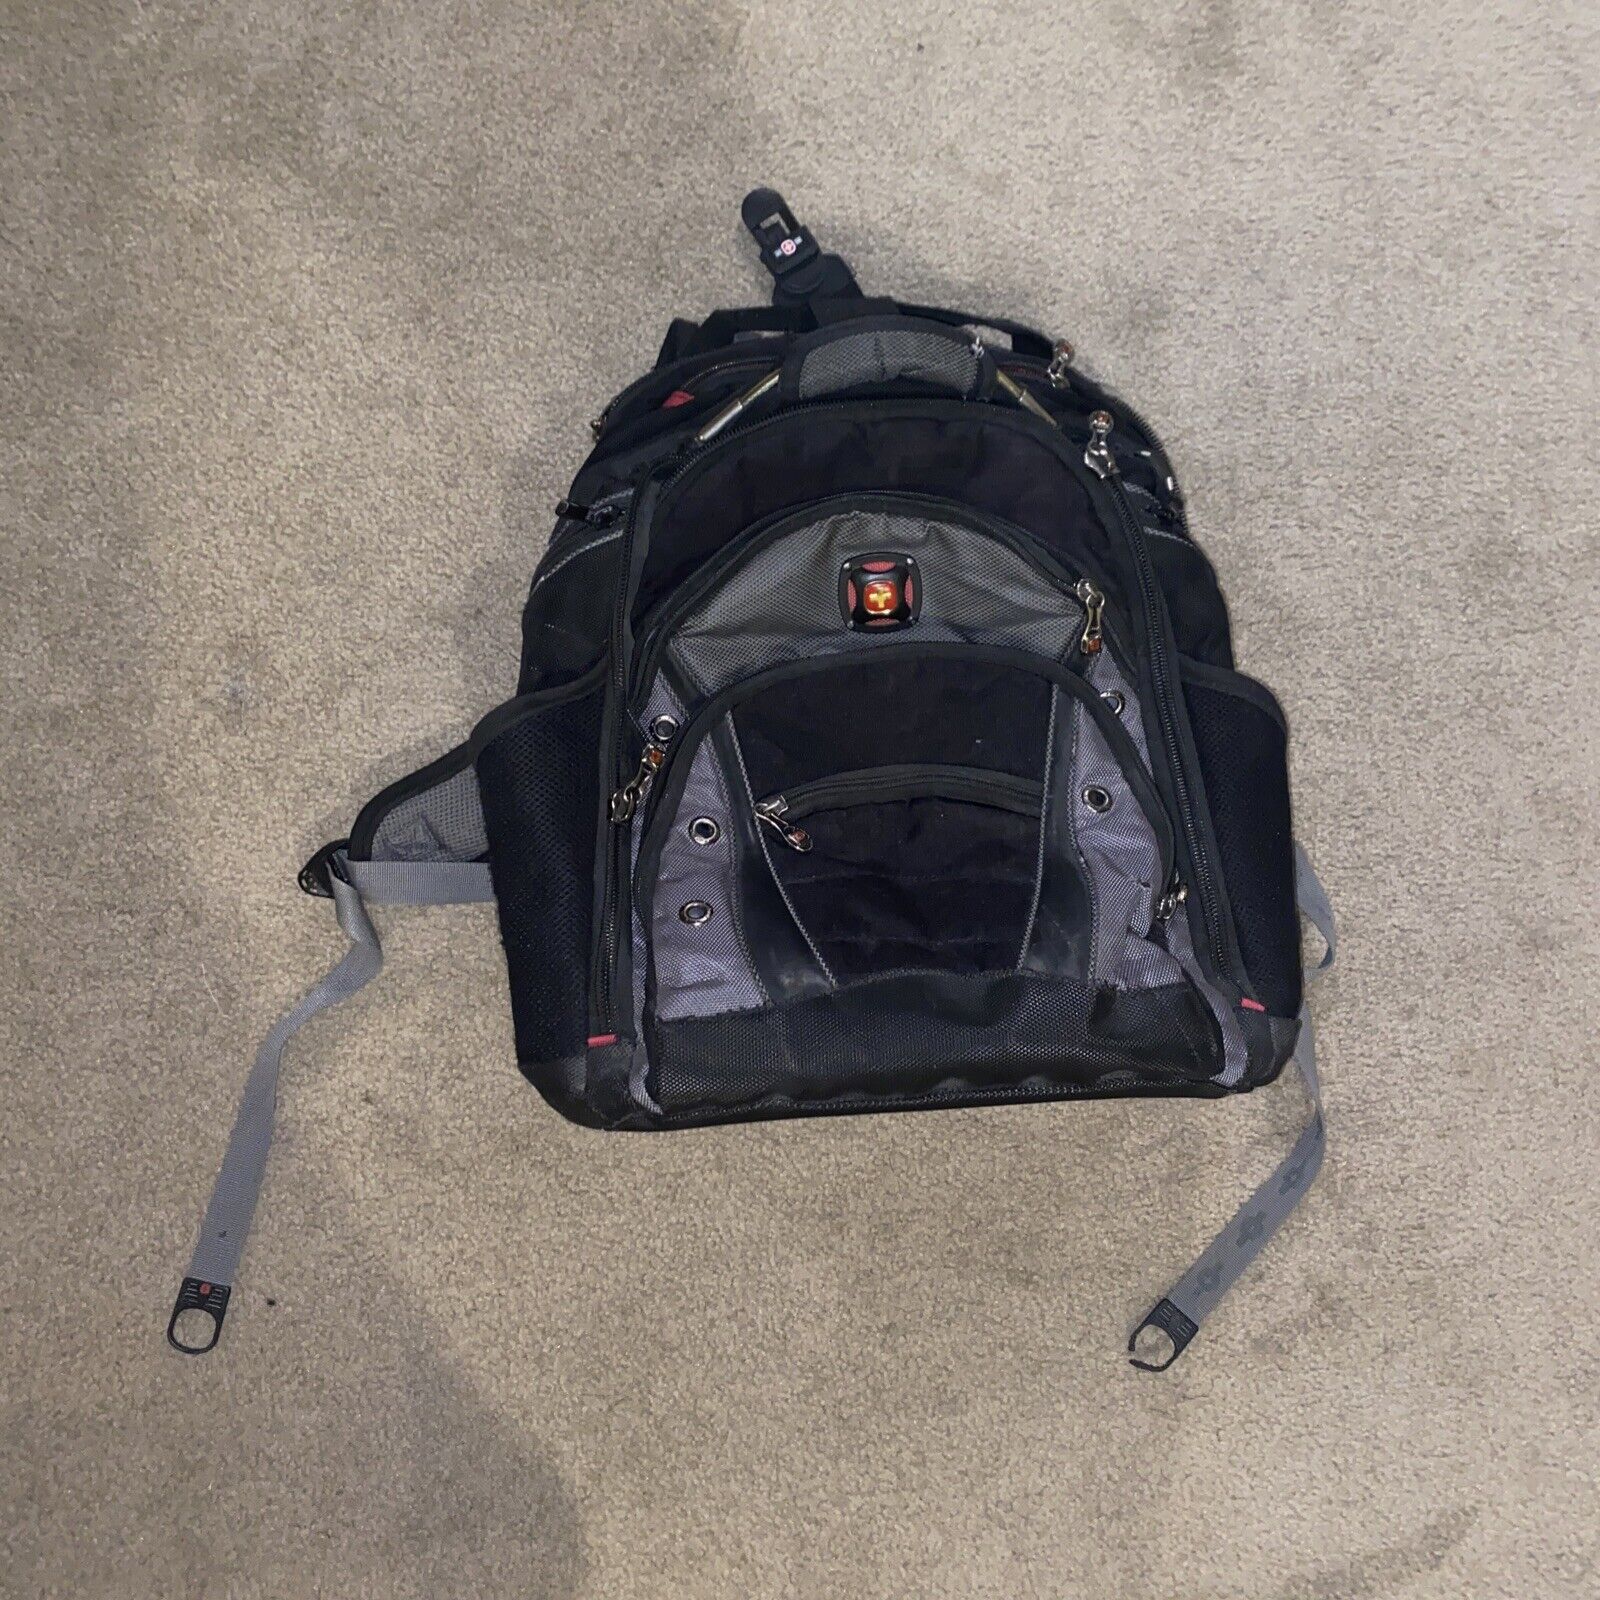 Wenger SwissGear Swiss Army  Black Grey Computer Backpack Hiking Bag